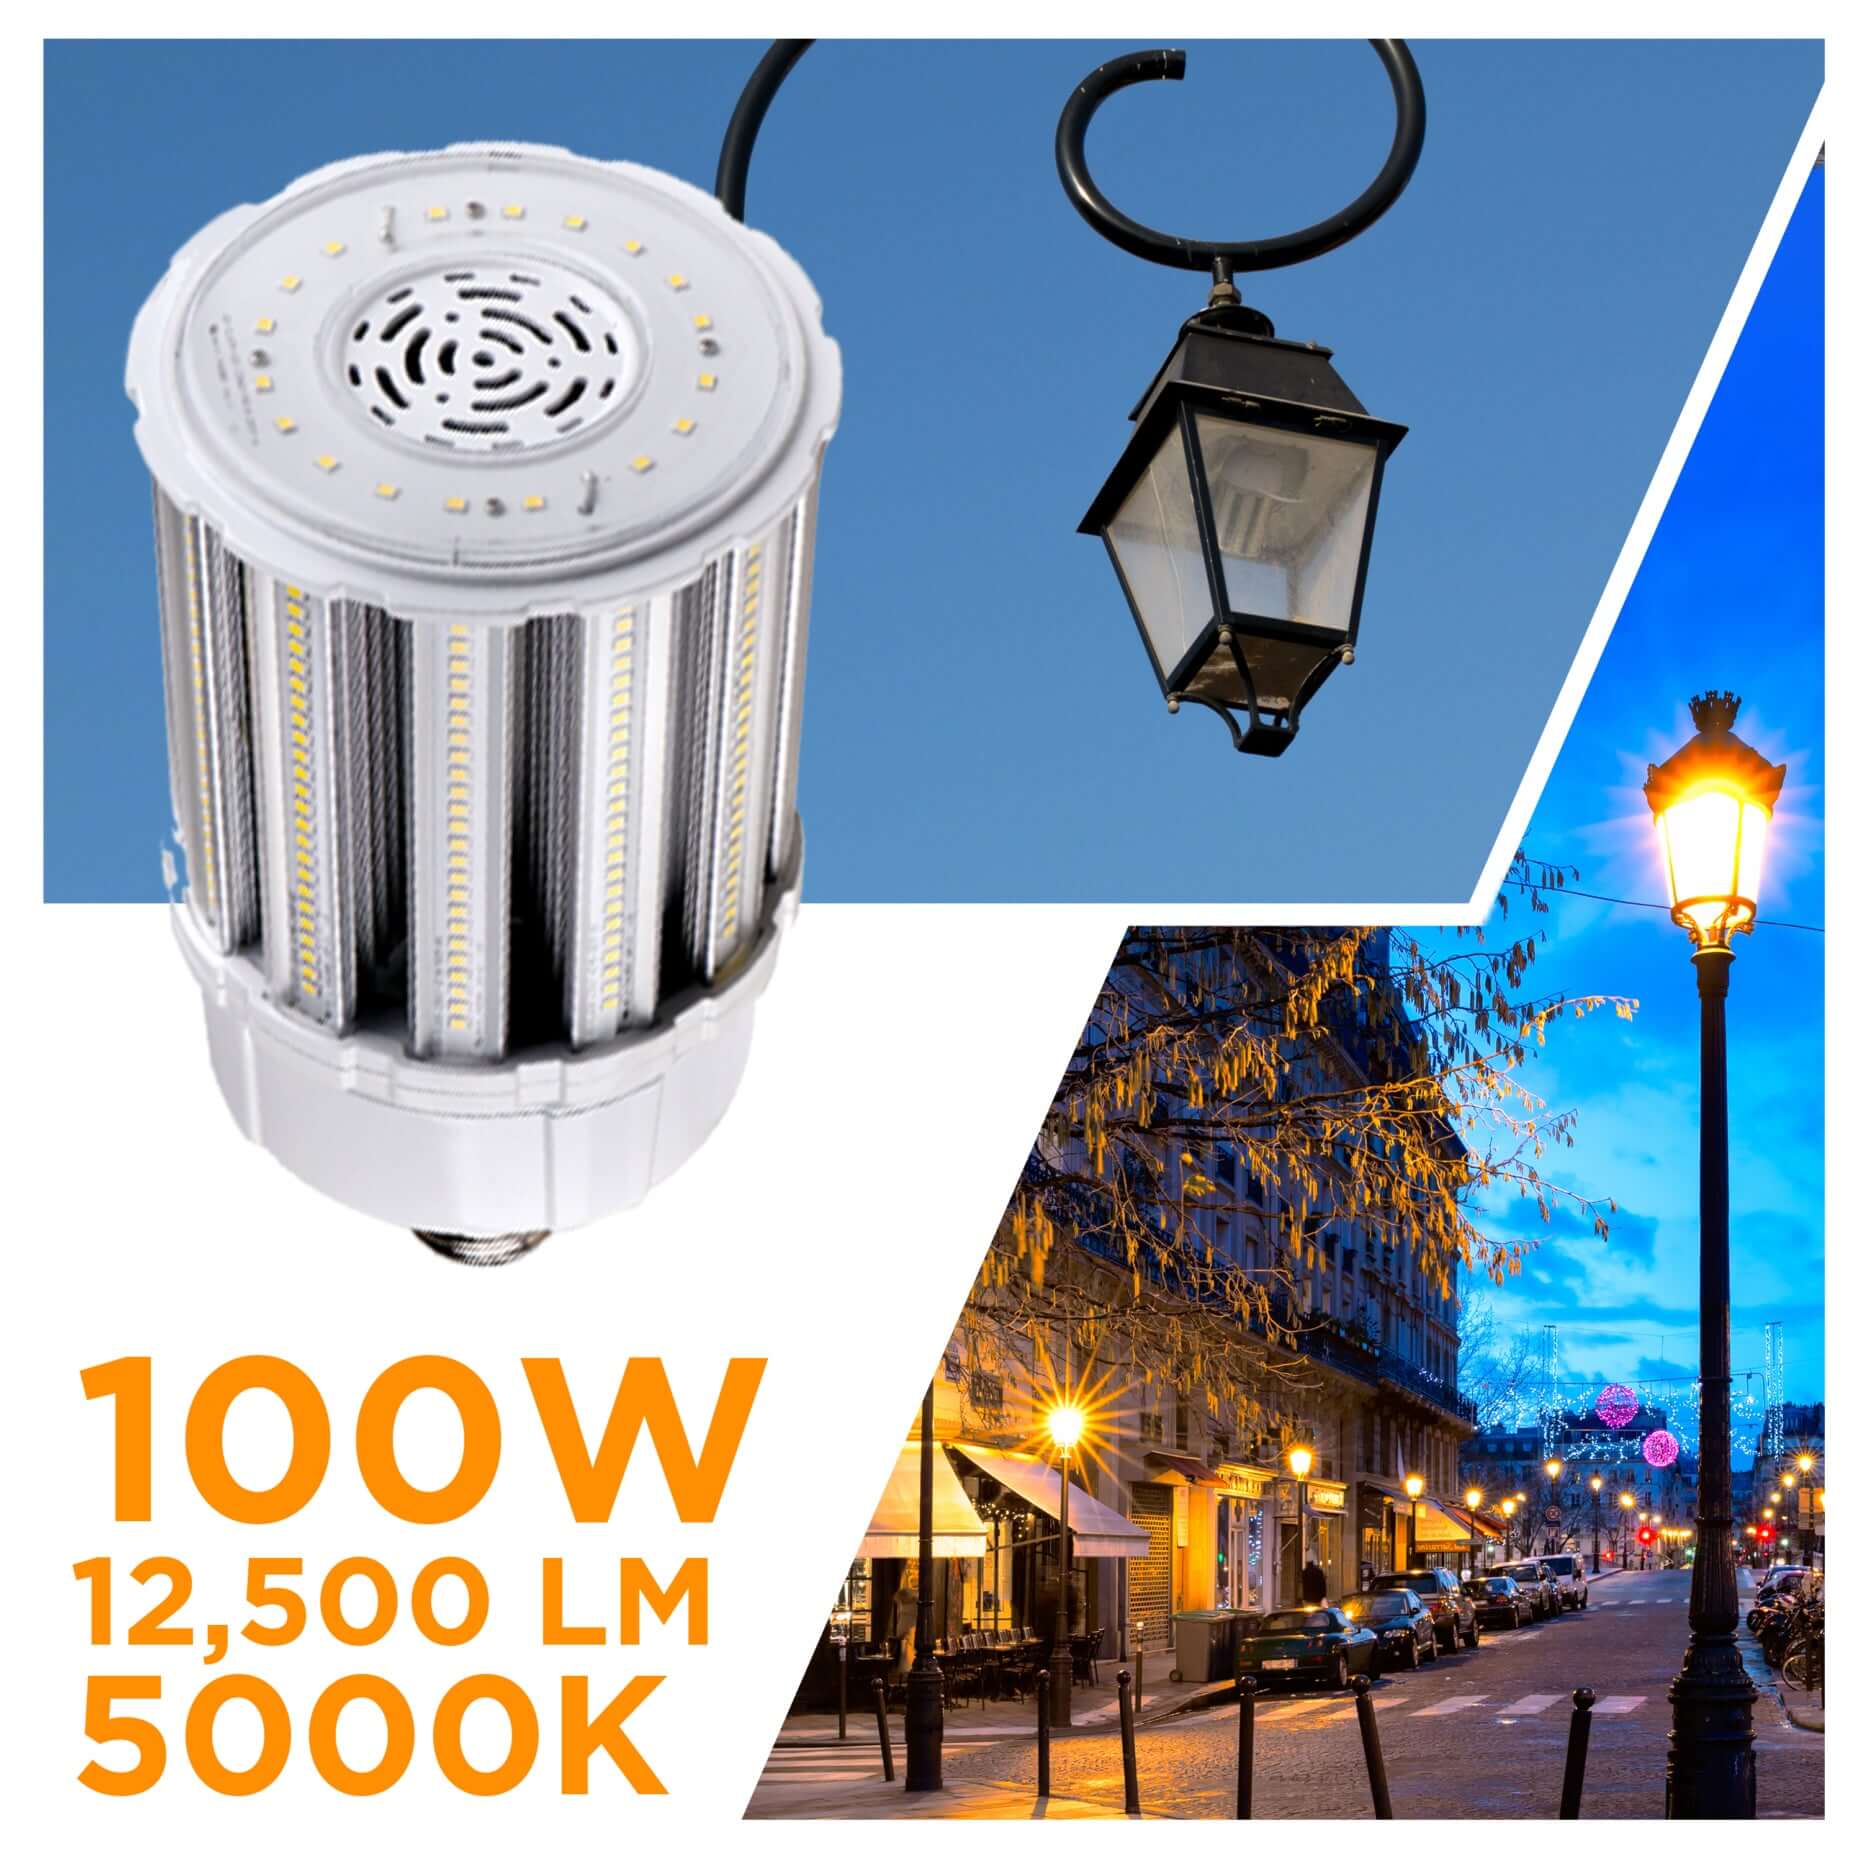 Viribright - 100-Watt LED 12,500 Lumens Corn Bulb - EX39/E26 Adapter Included - 519676